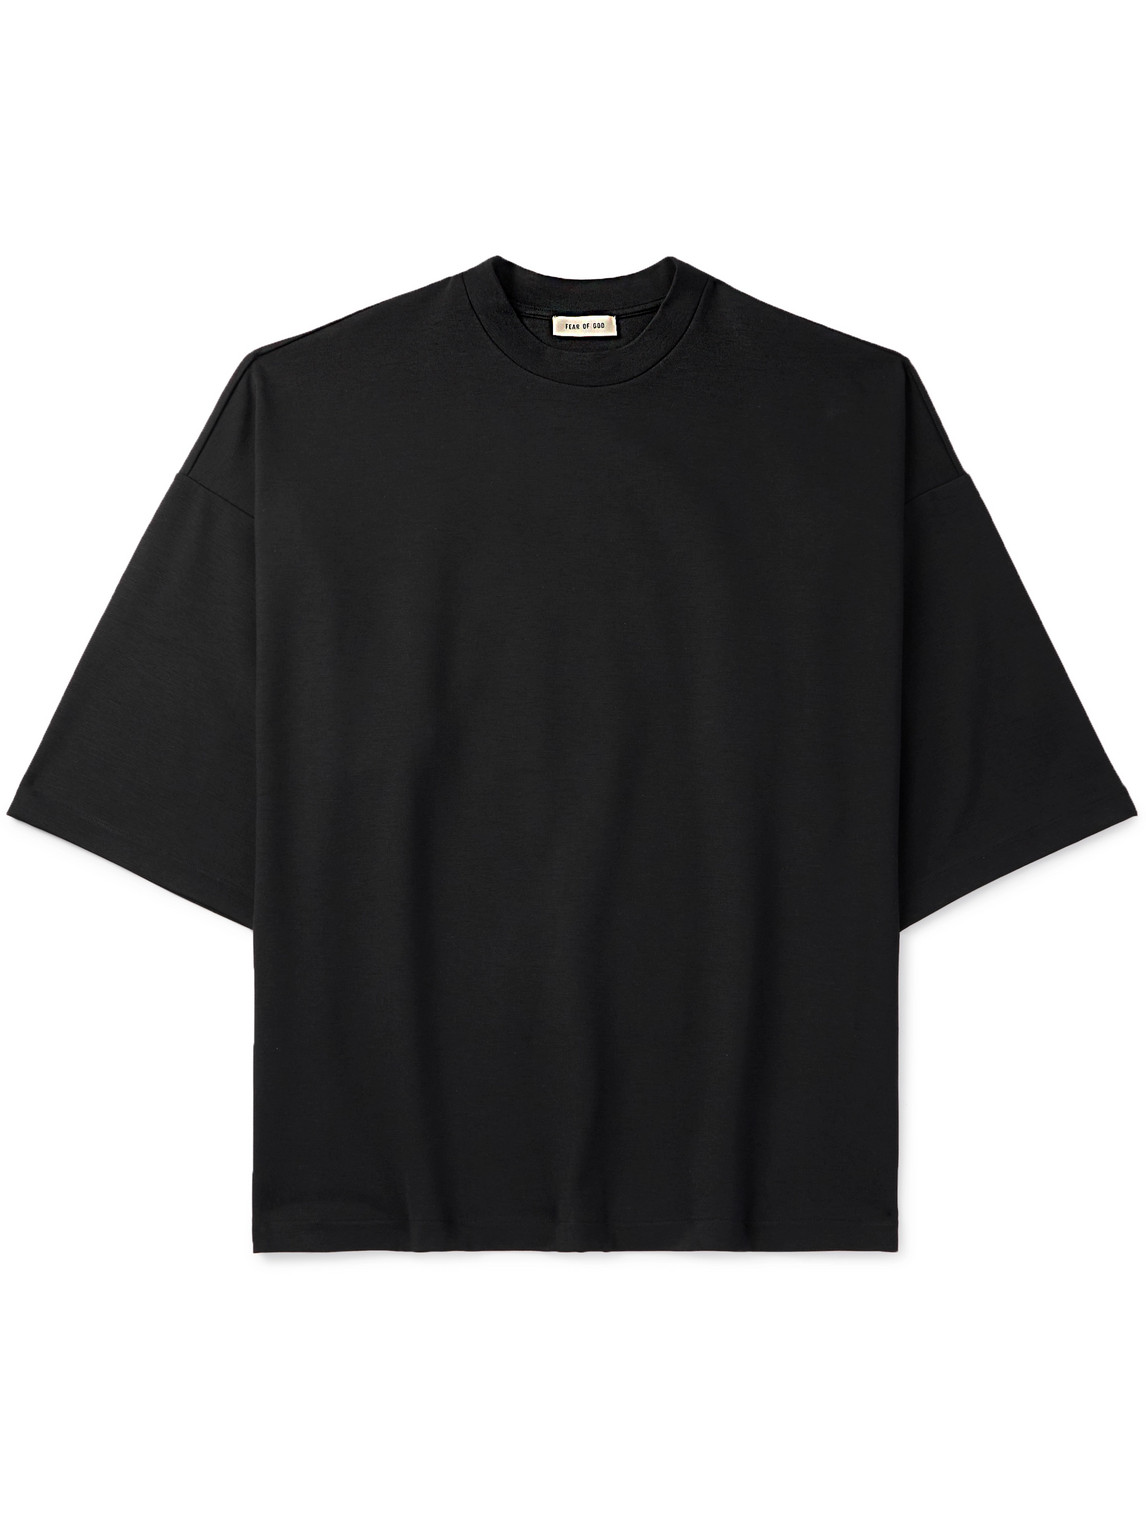 Fear of God - Thunderbird Milano Oversized Embroidered Jersey T-Shirt - Men - Black - XL von Fear of God